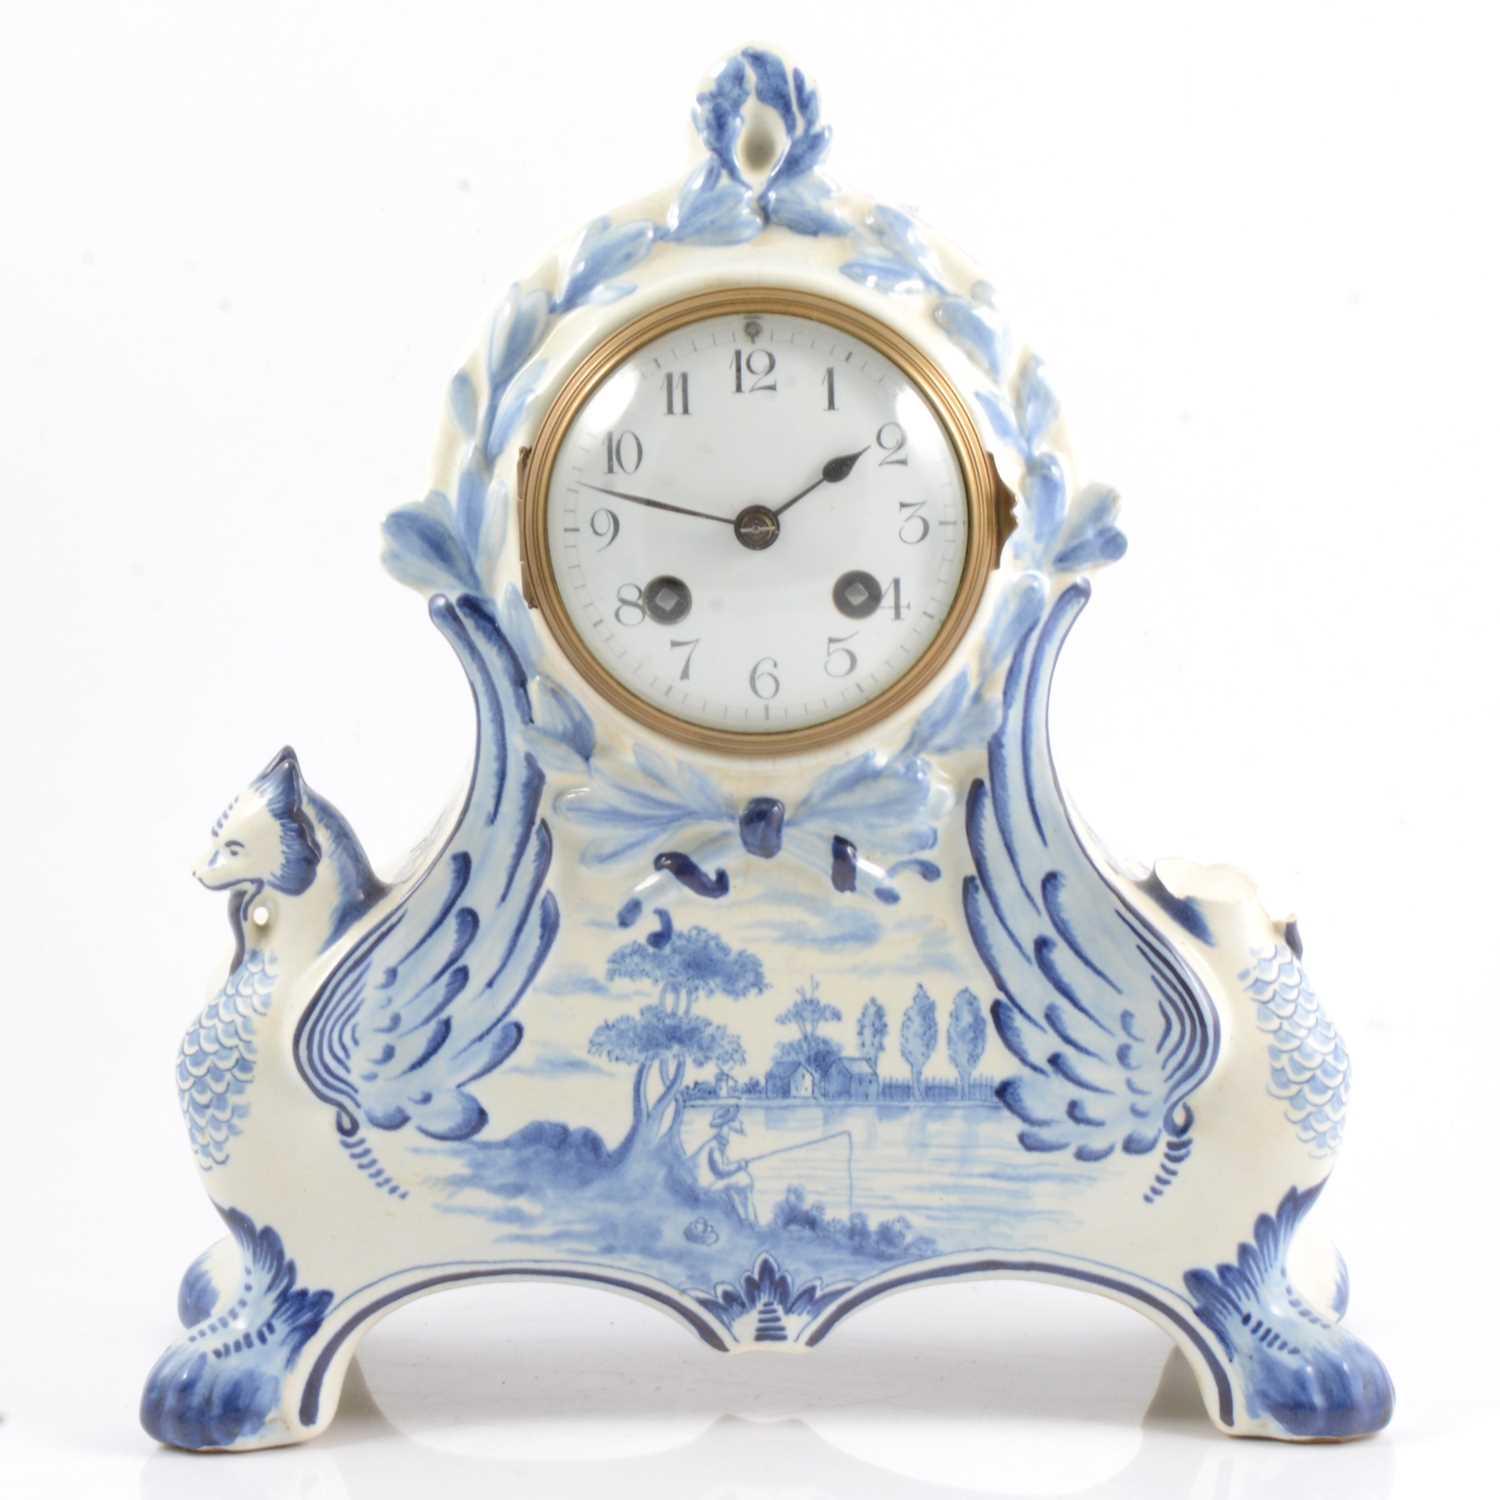 Lot 79 - French pottery mantel clock